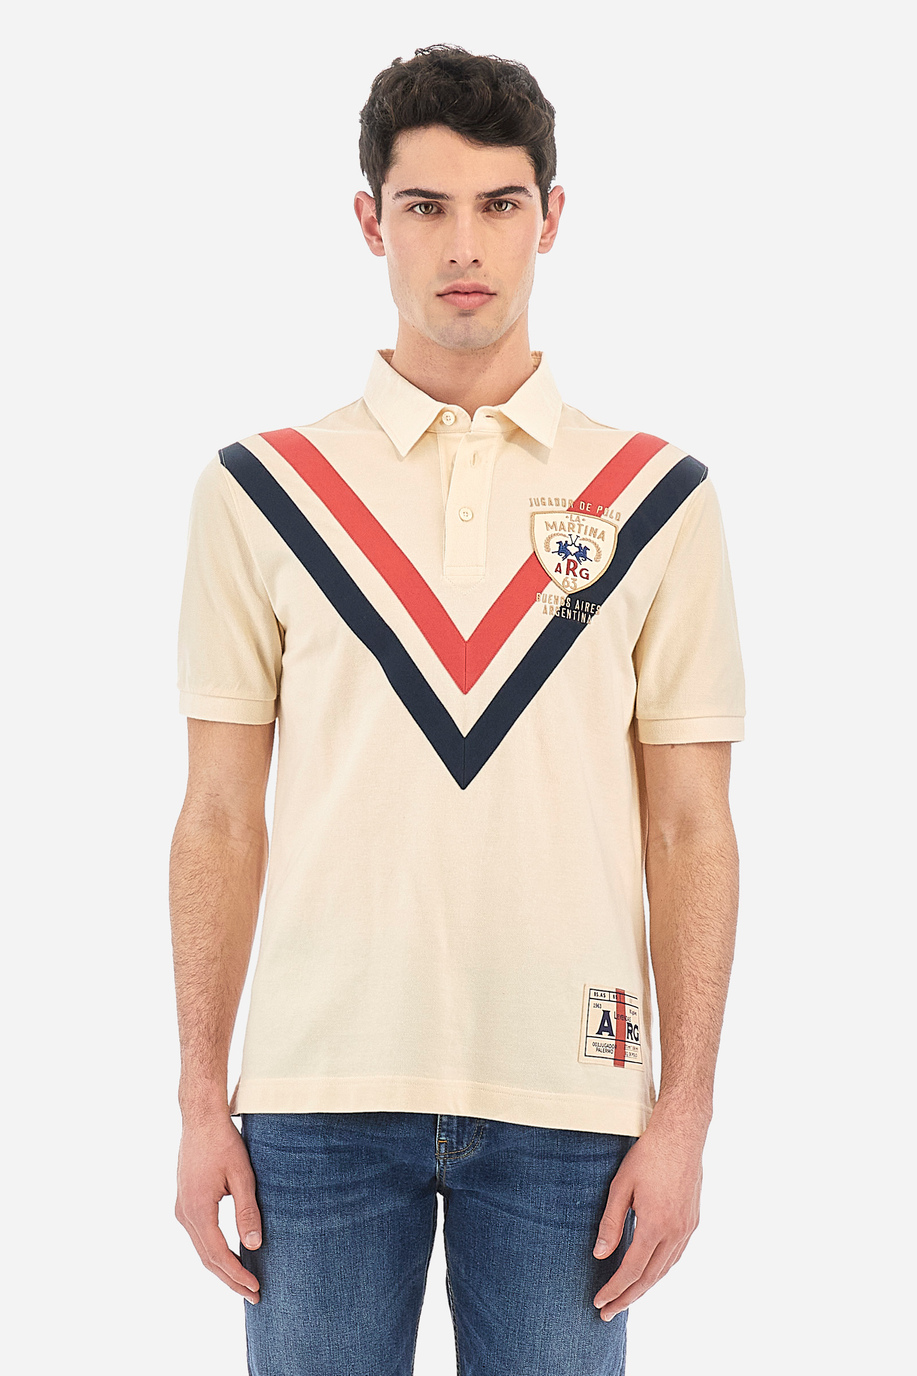 Regular fit 100% cotton short-sleeved polo shirt for men - Valoree - Leyendas del Polo | La Martina - Official Online Shop